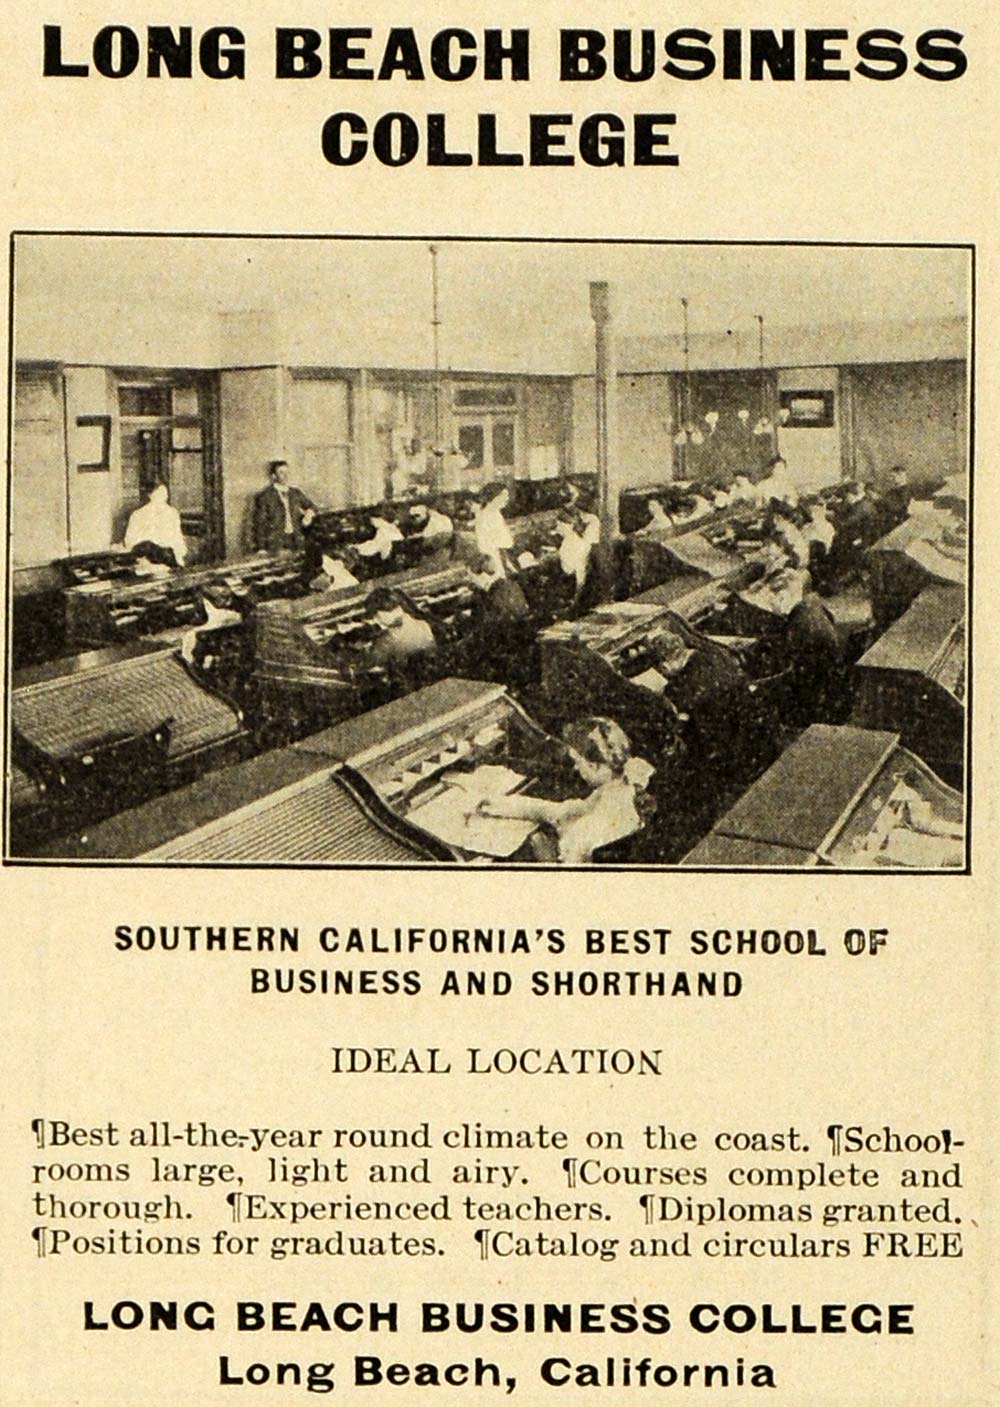 1906 Ad Long Beach Business College University School - ORIGINAL ADVERTISING PM2